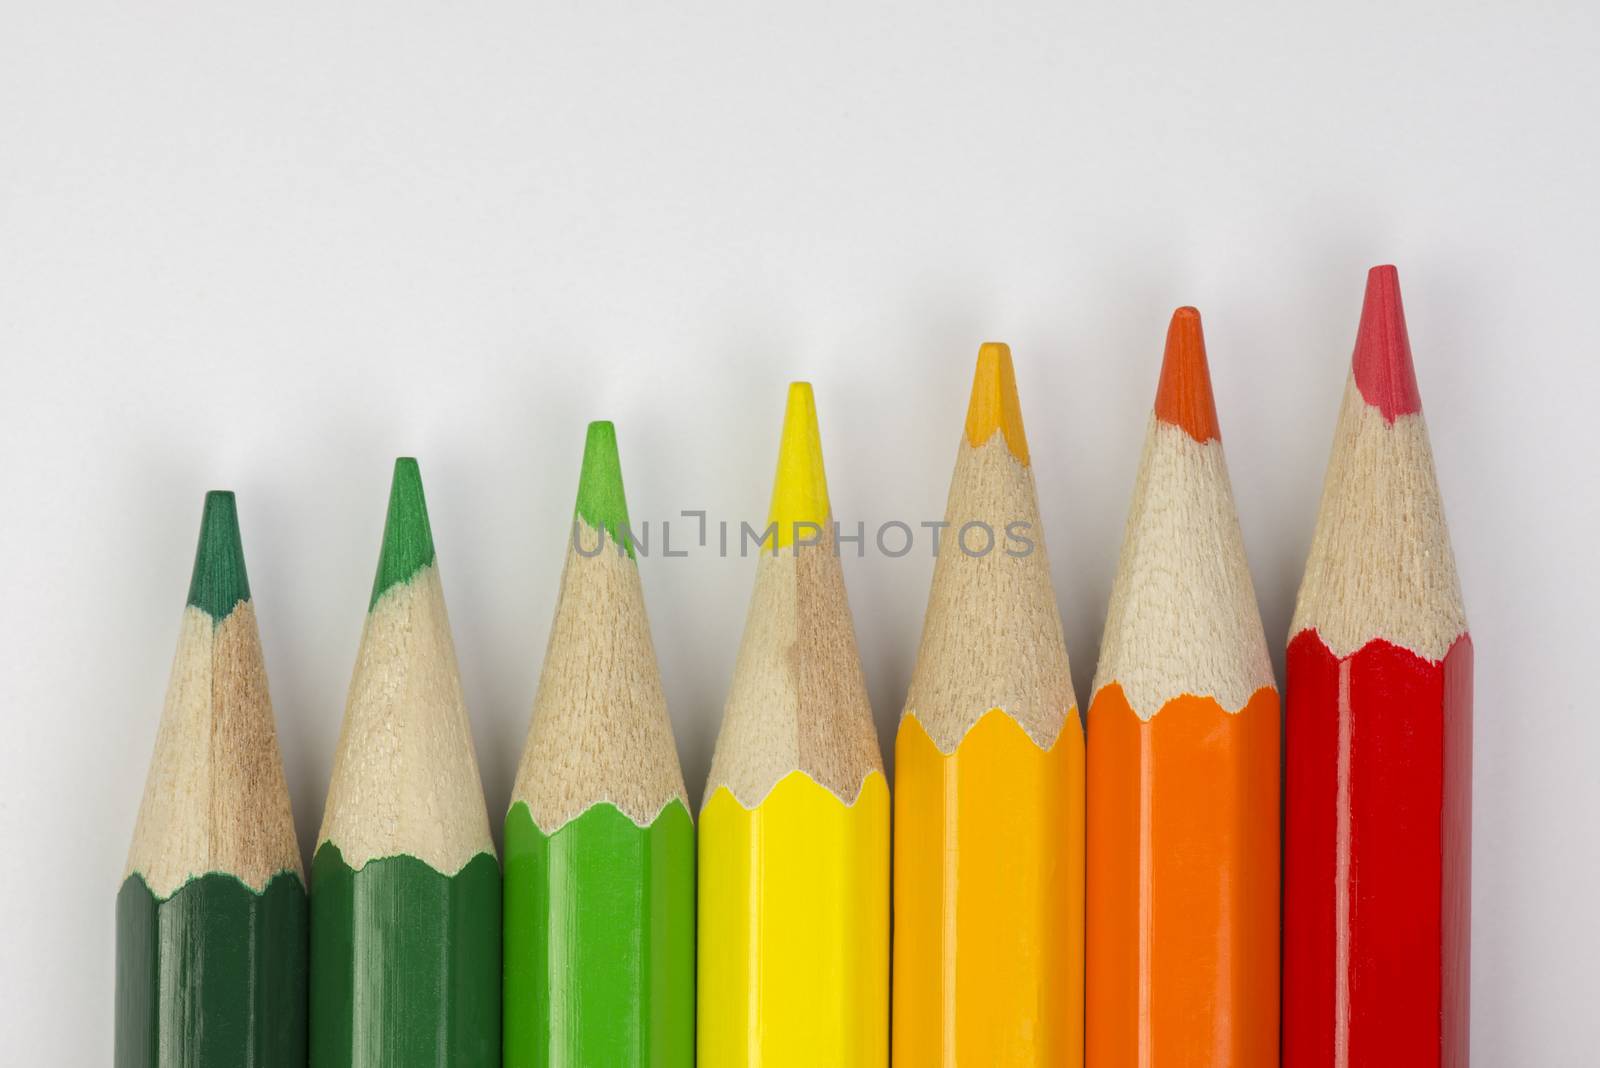 Conceptual crayons represented as successor energy label colors
